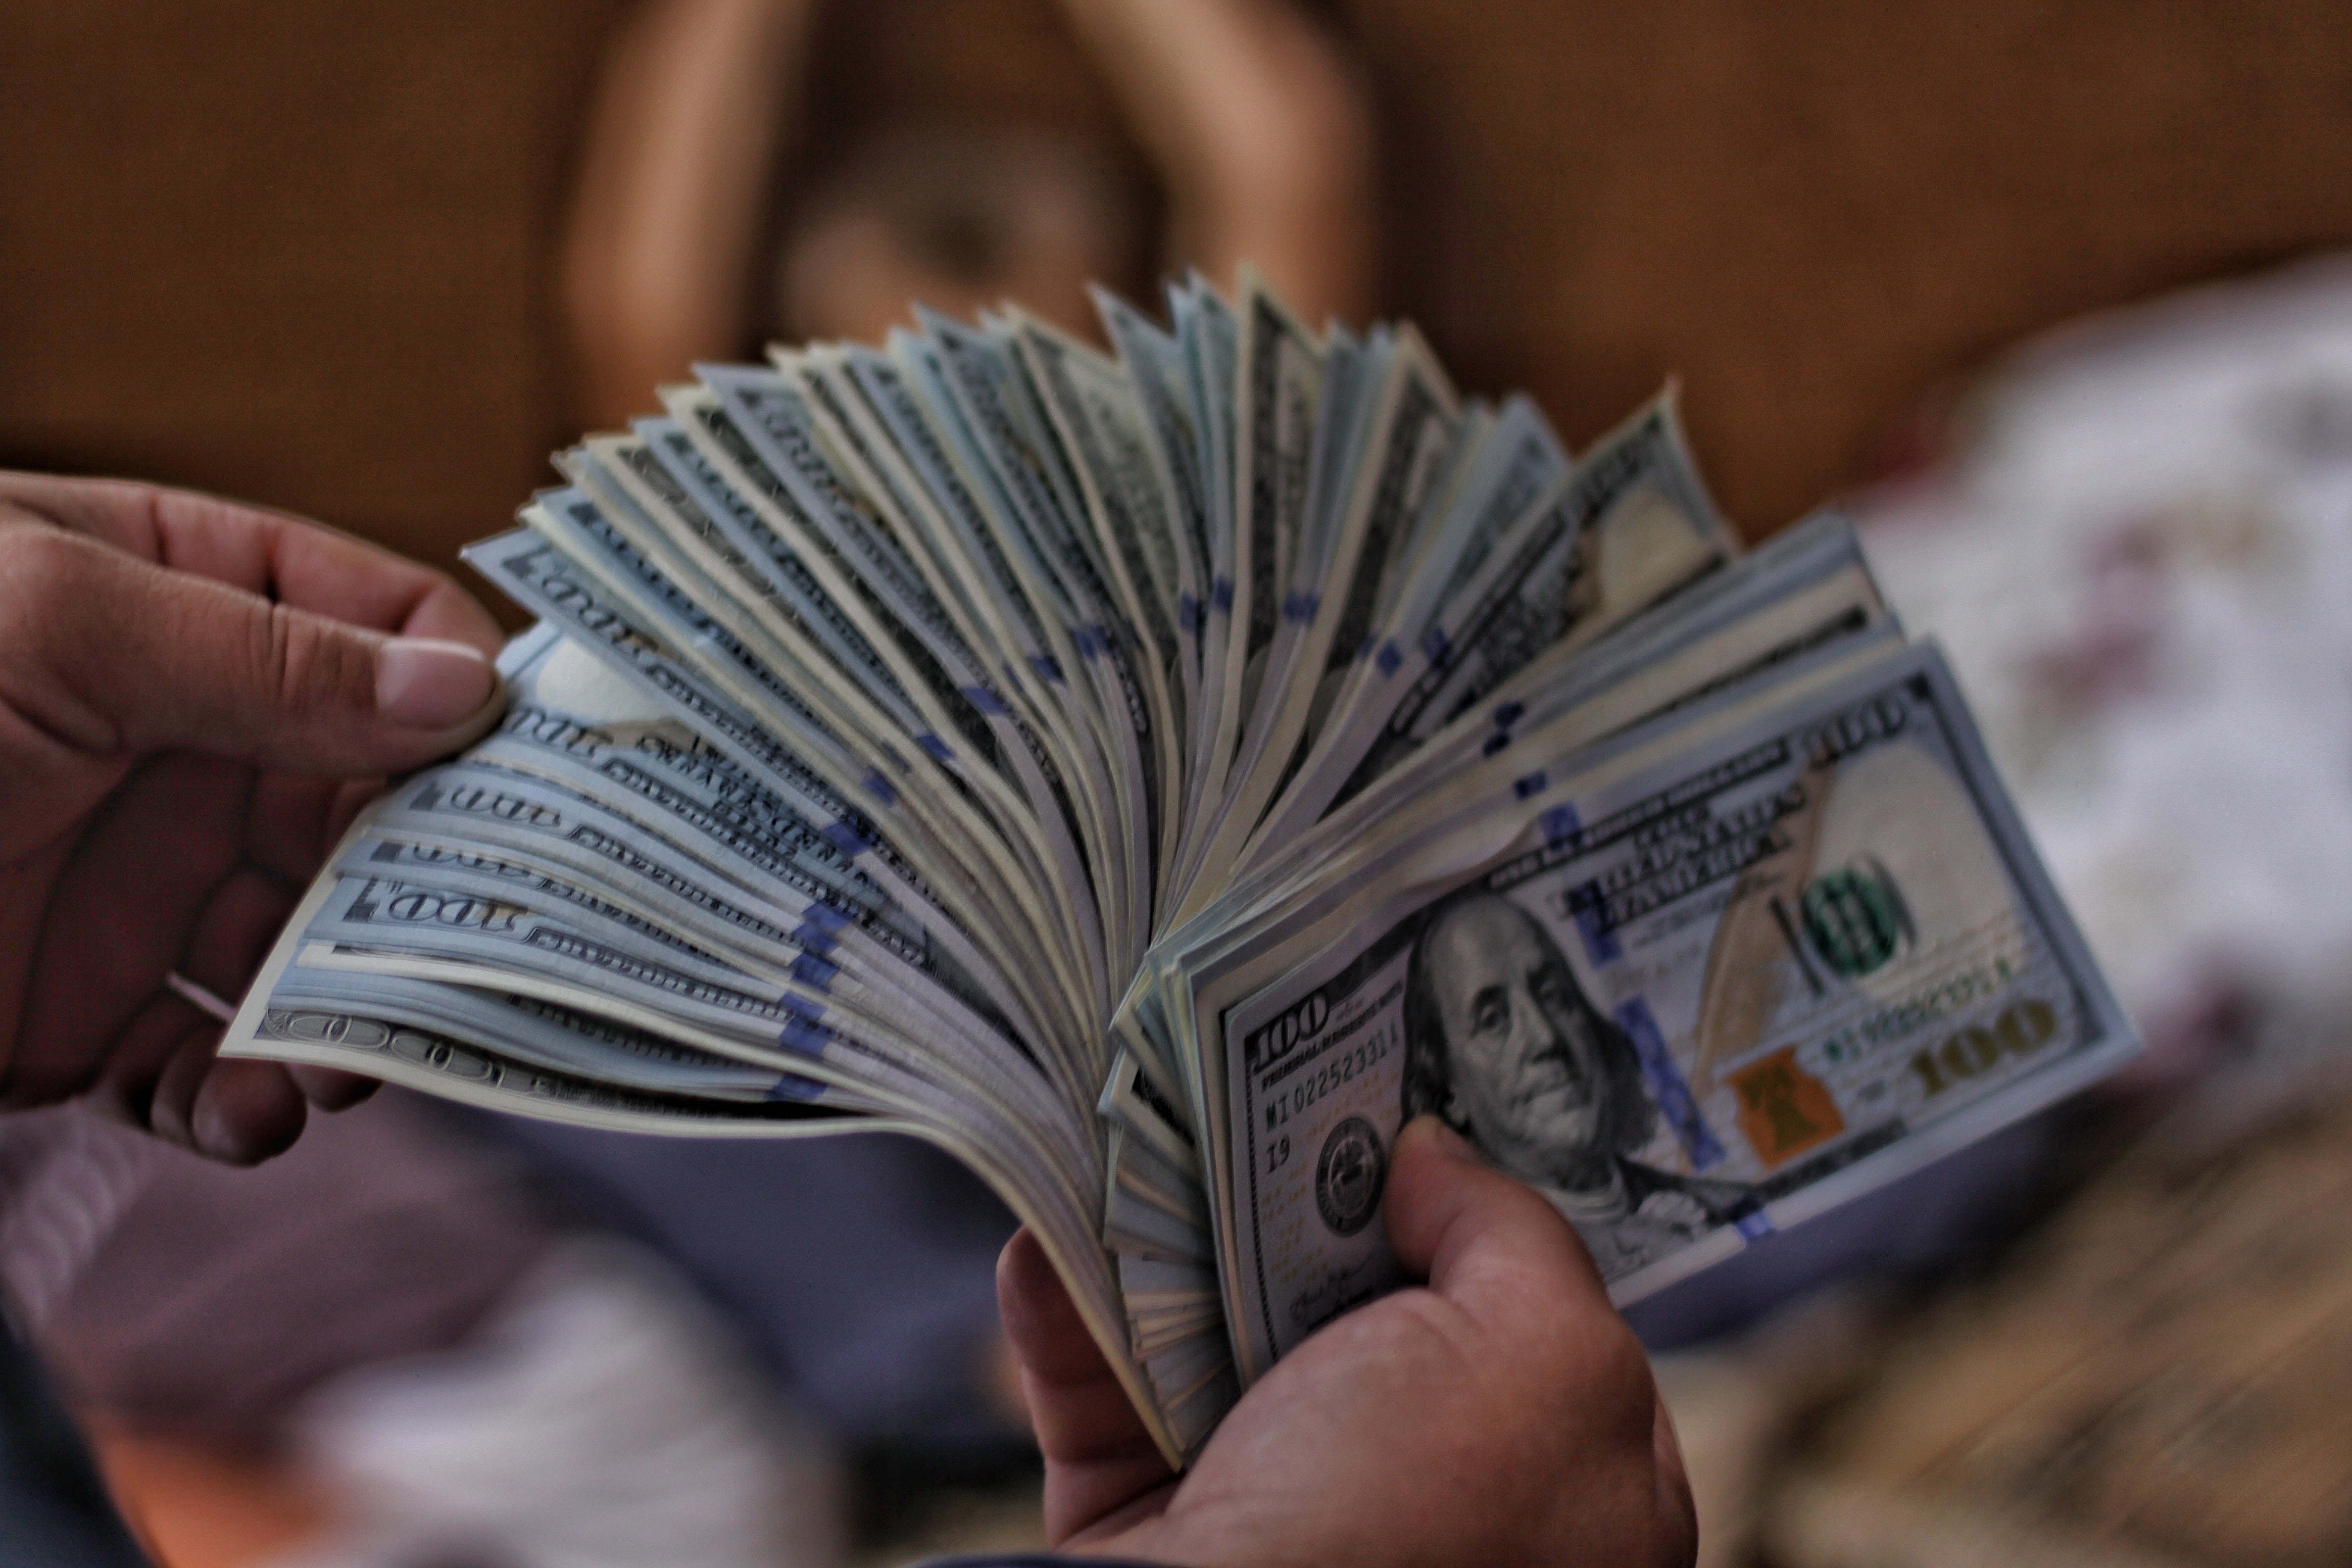 Dólar, dinheiro (Foto: Unsplash)